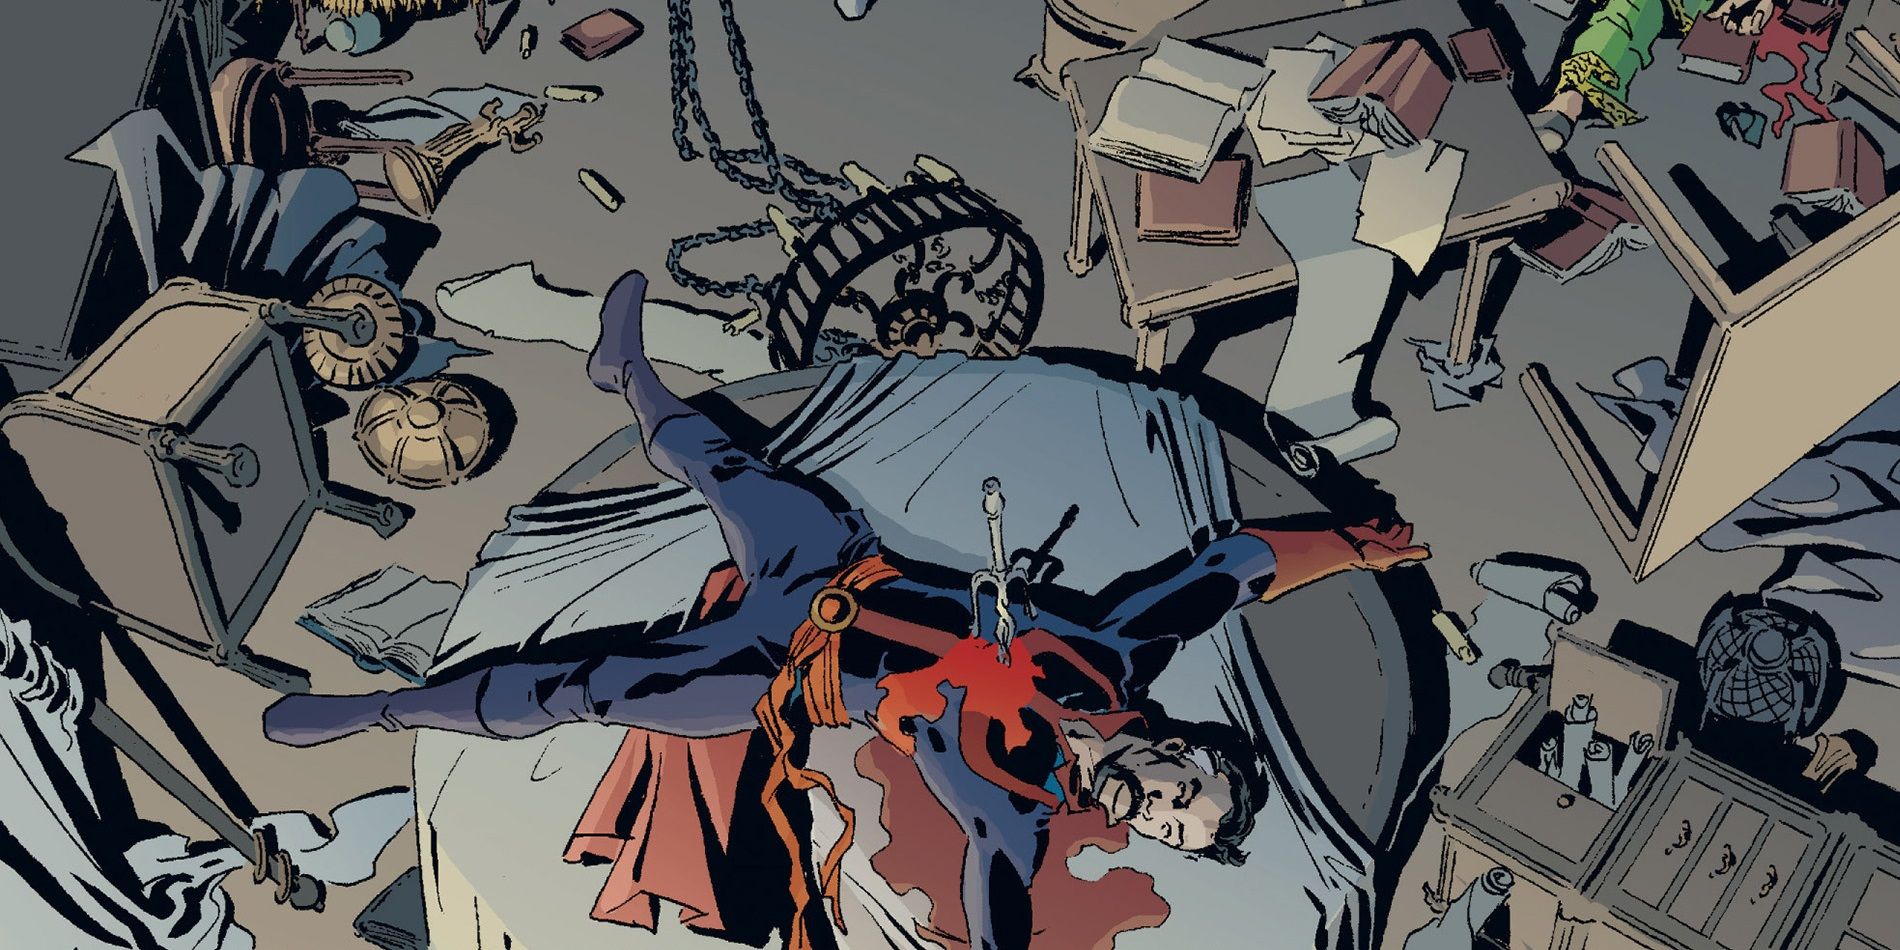 Doctor Strange after being killed by Deadpool